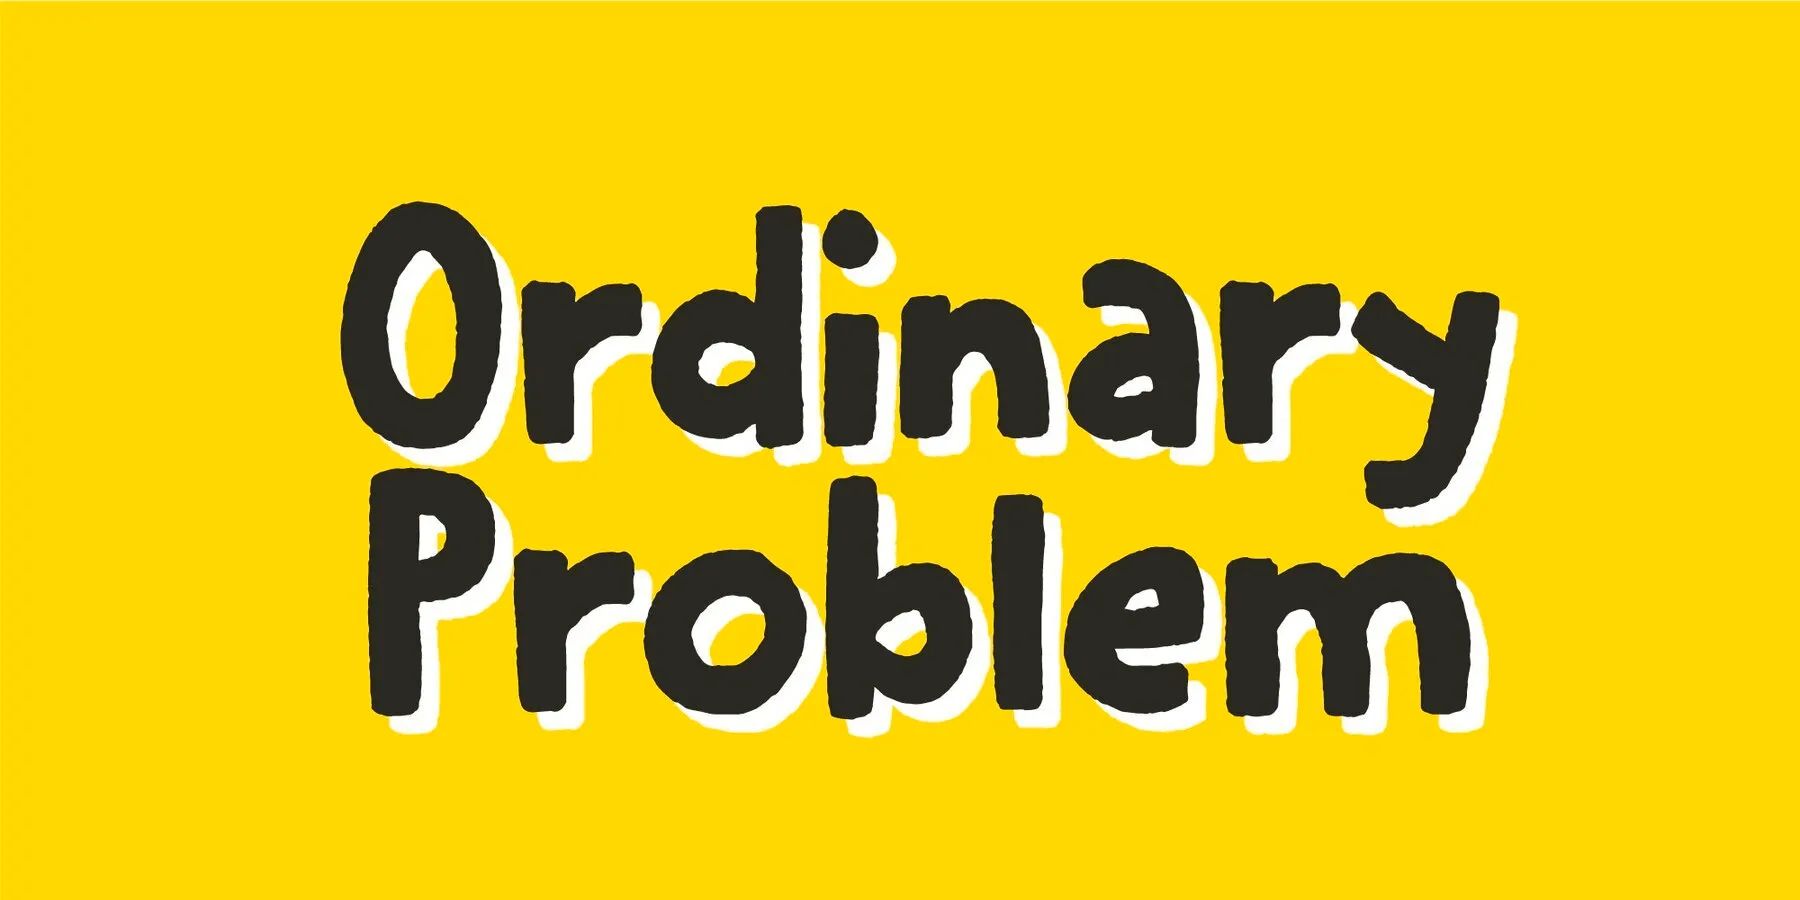 Ordinary Problem